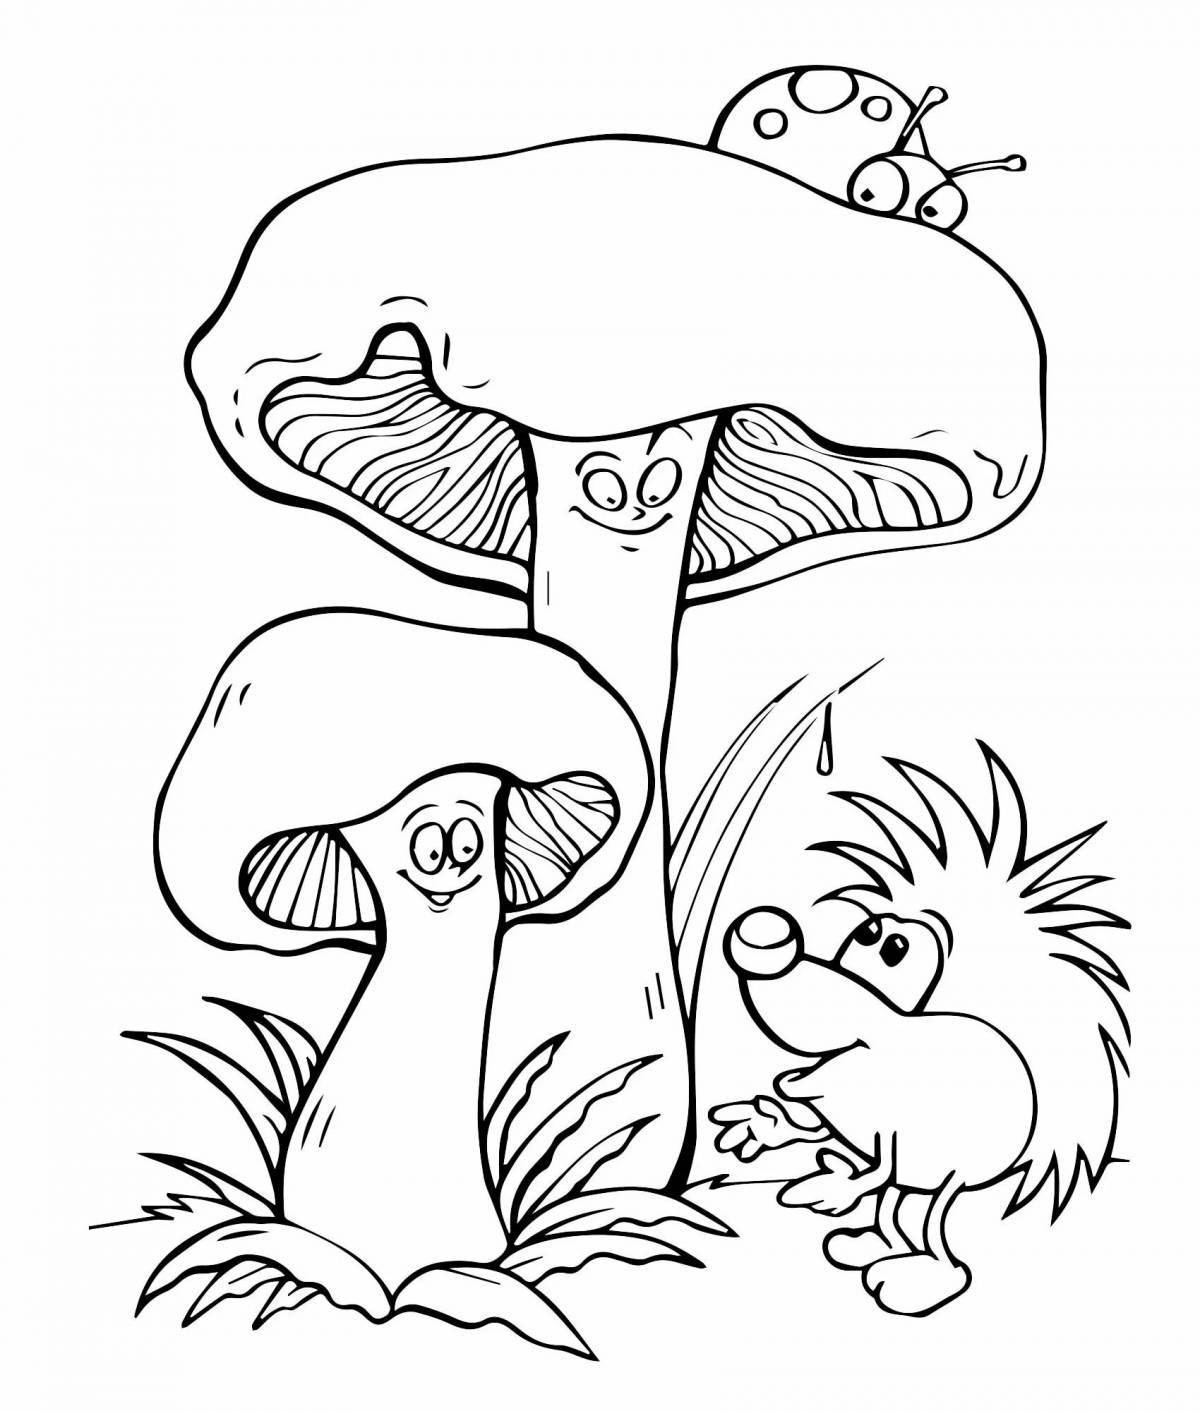 Drawing of sparkling mushrooms